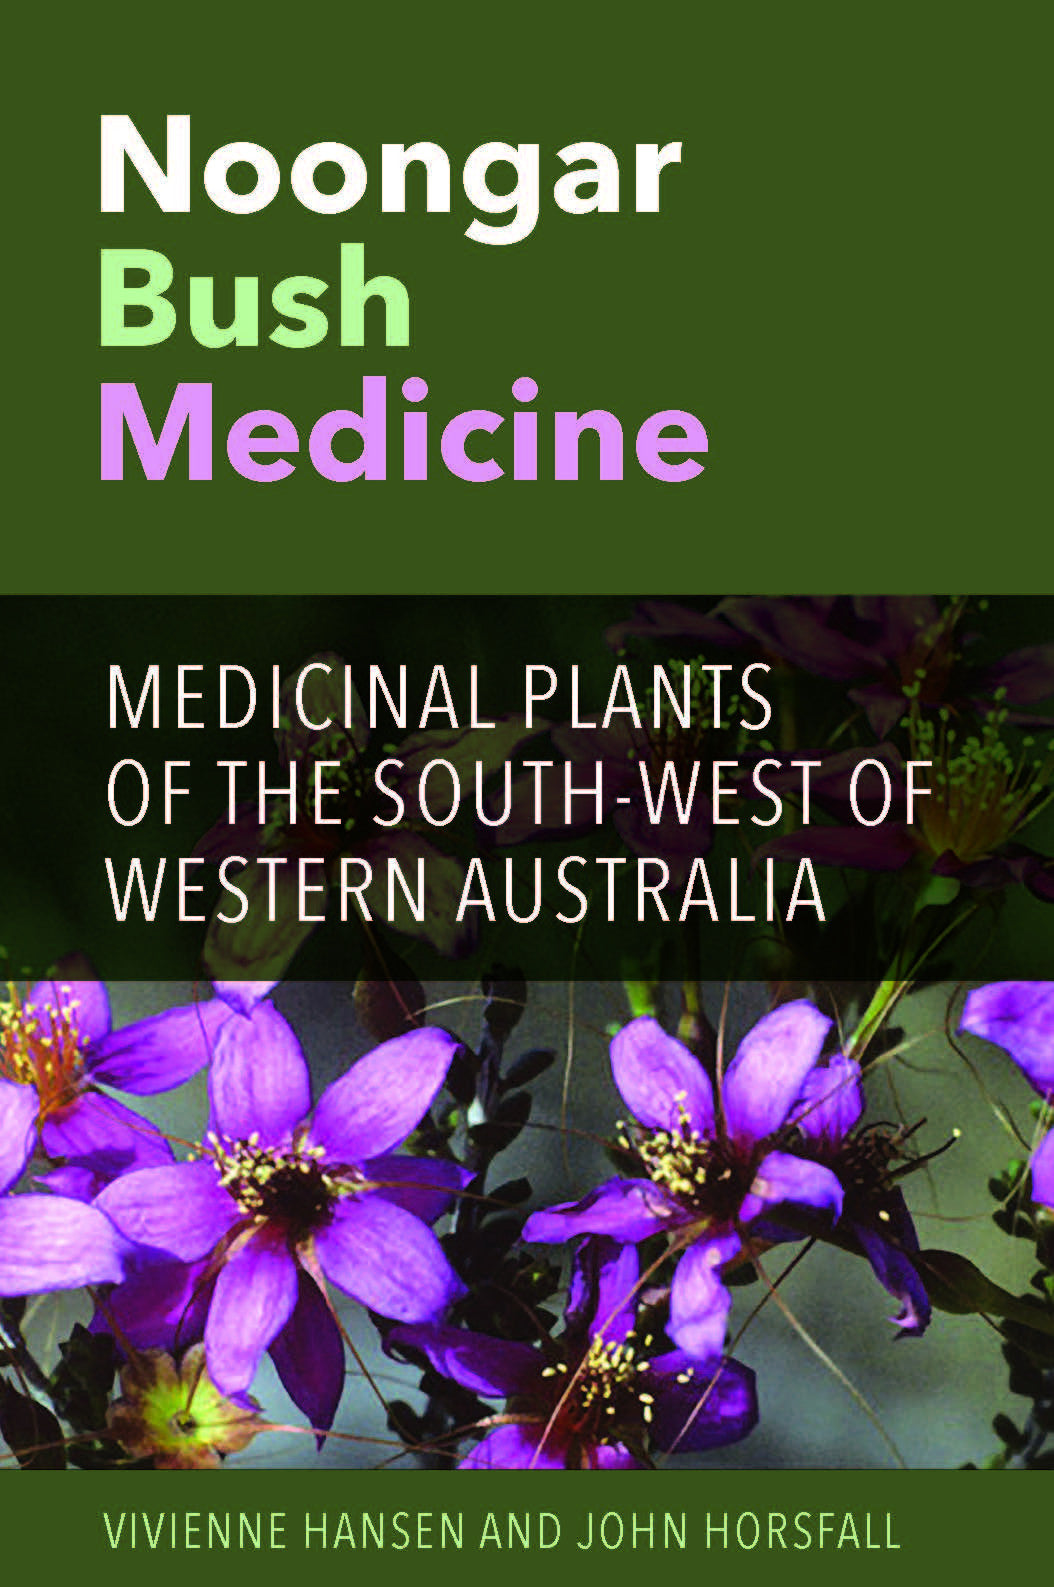 Noongar Bush Medicine: Medicinal Plants of the South-west of Western Australia